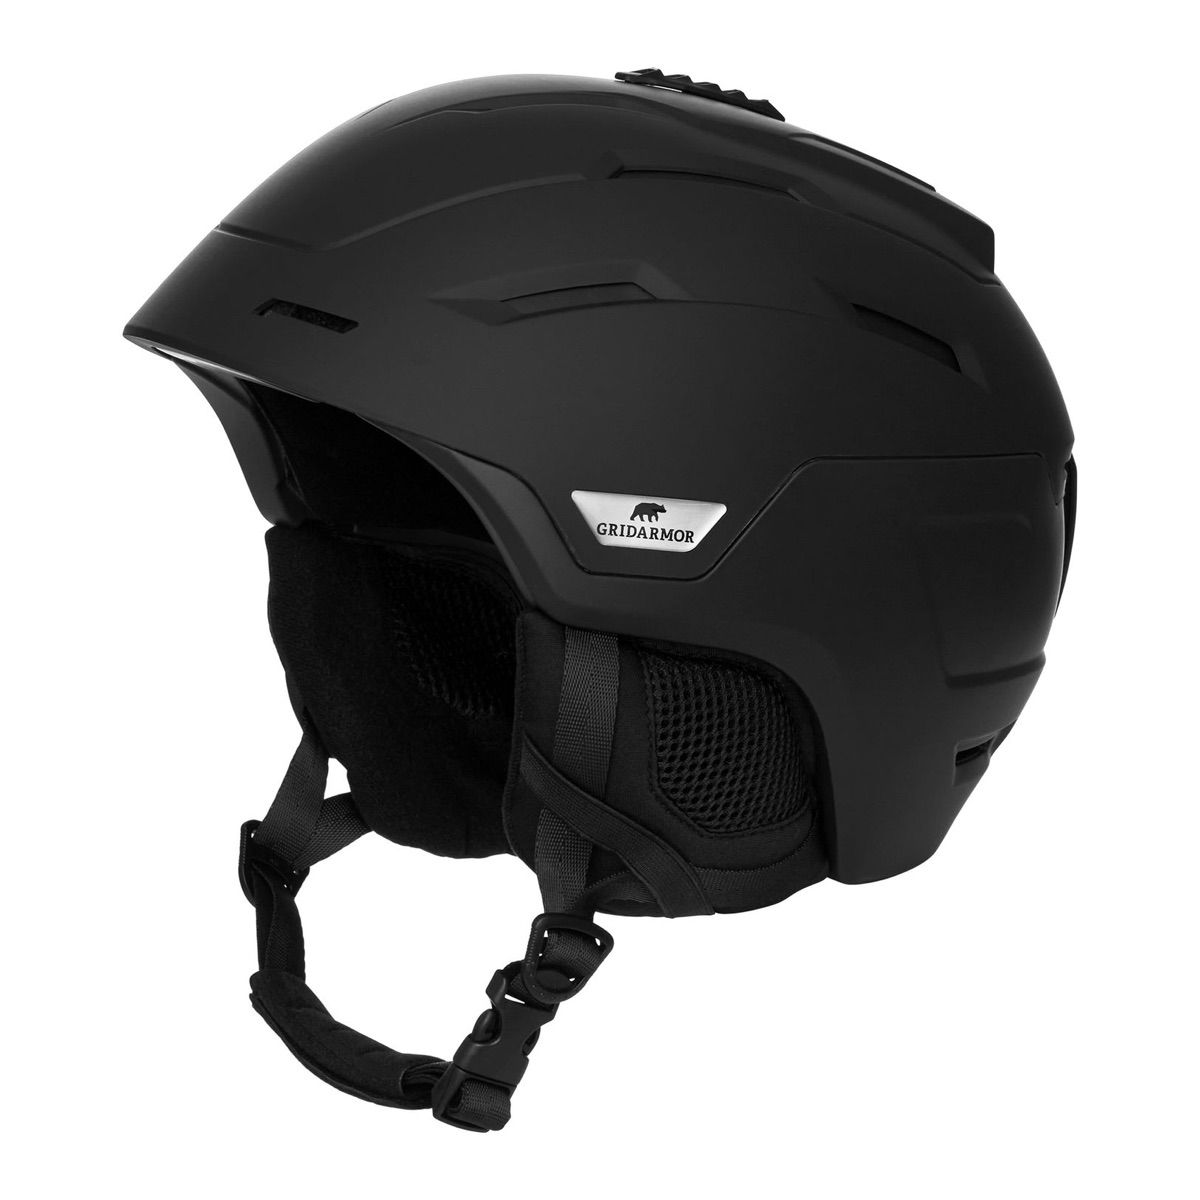 Gridarmor Hafjell Alpine Helmet Black